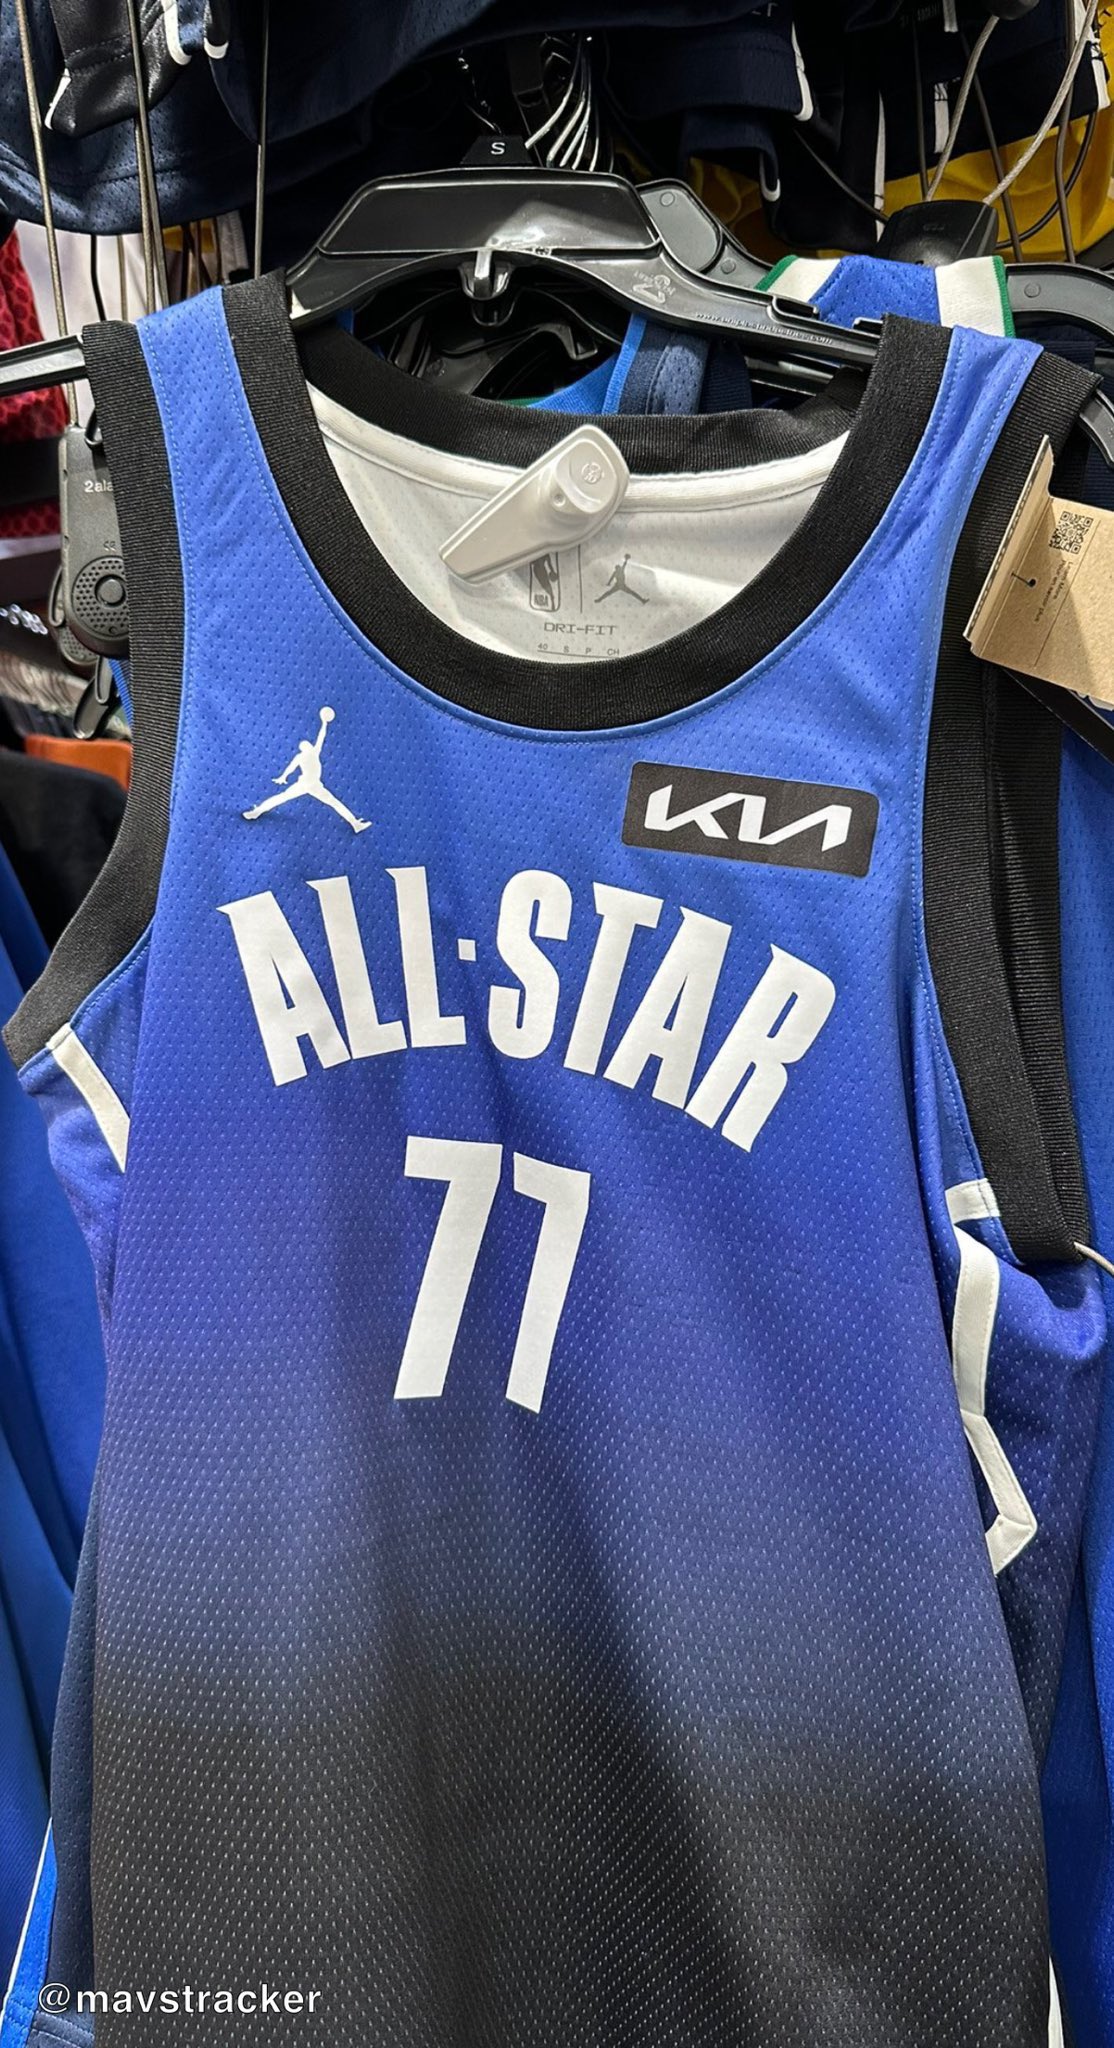 NBA All-Star Game jerseys leaked? Photo of jerseys on Twitter